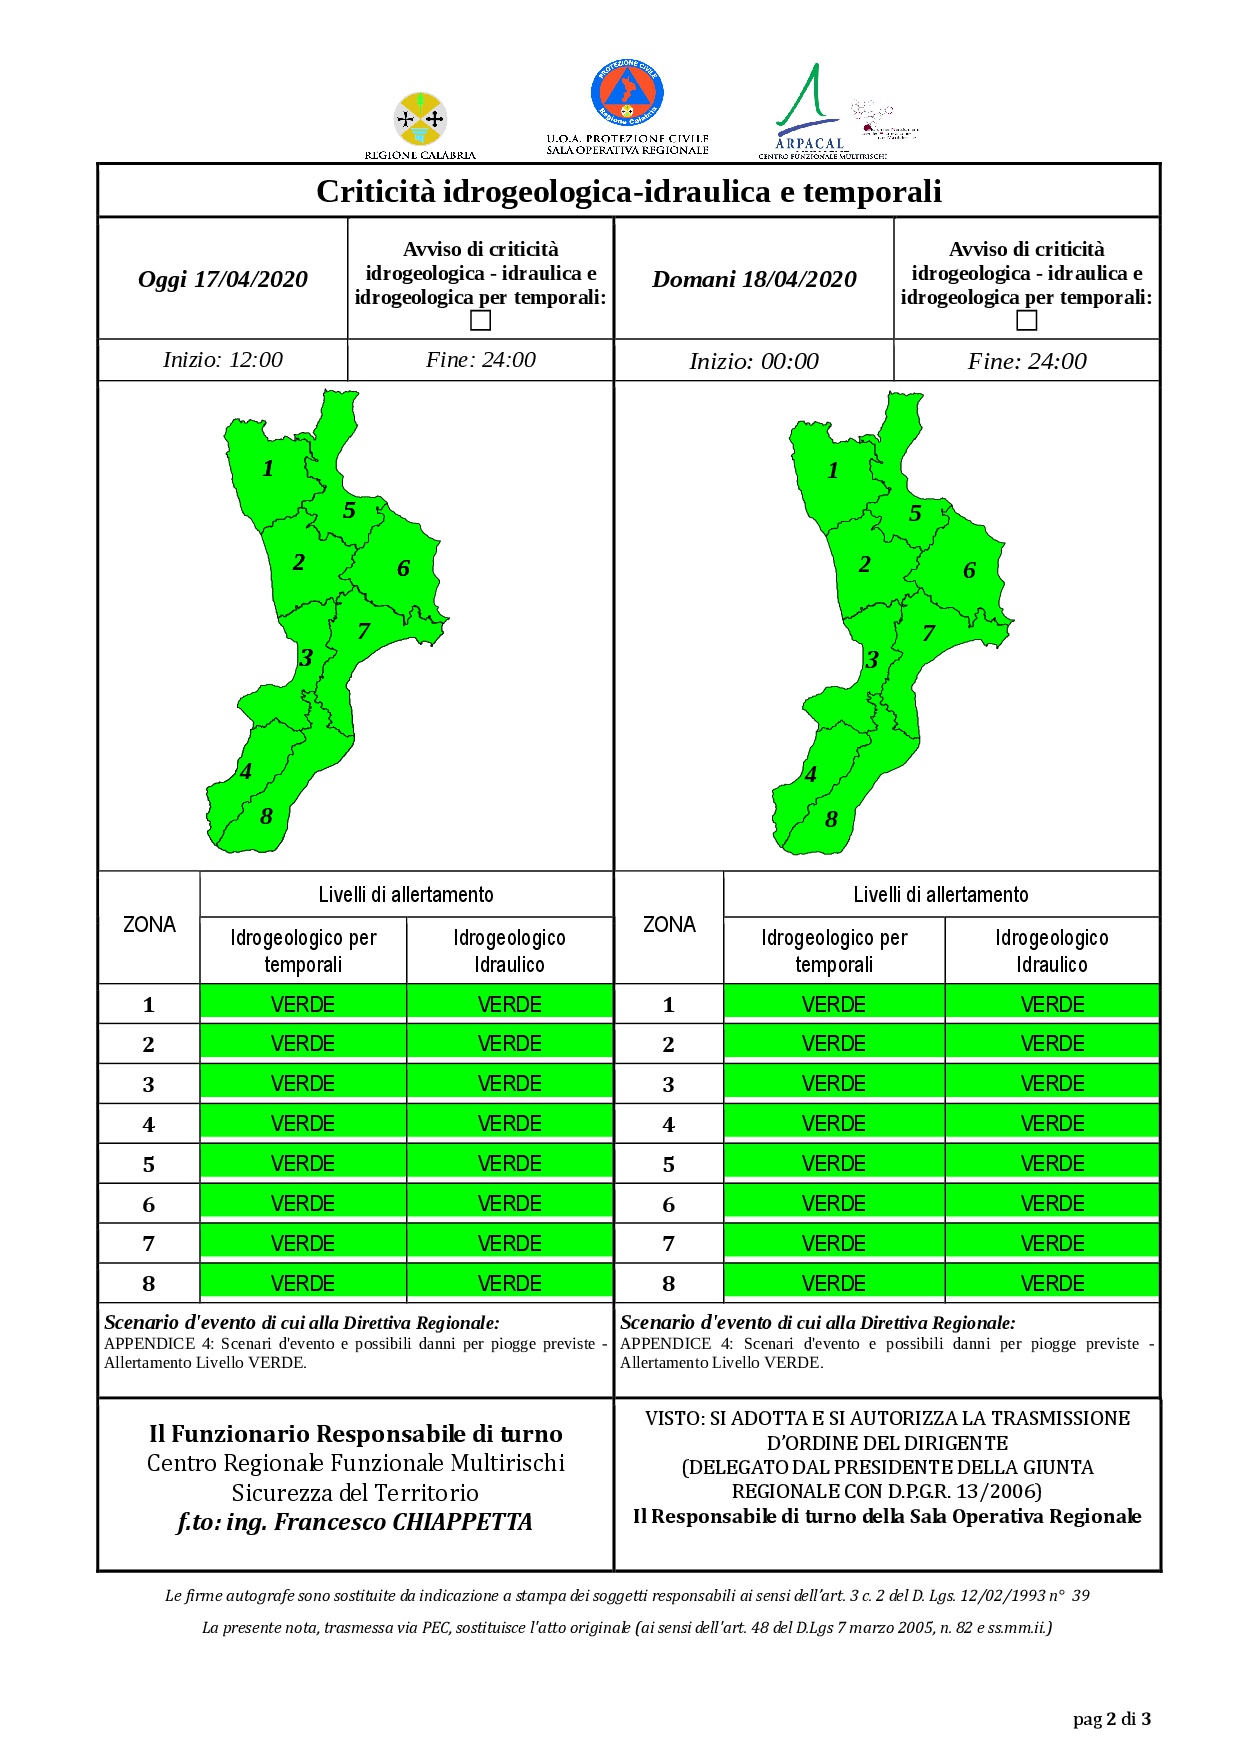 Criticità idrogeologica-idraulica e temporali in Calabria 17-04-2020